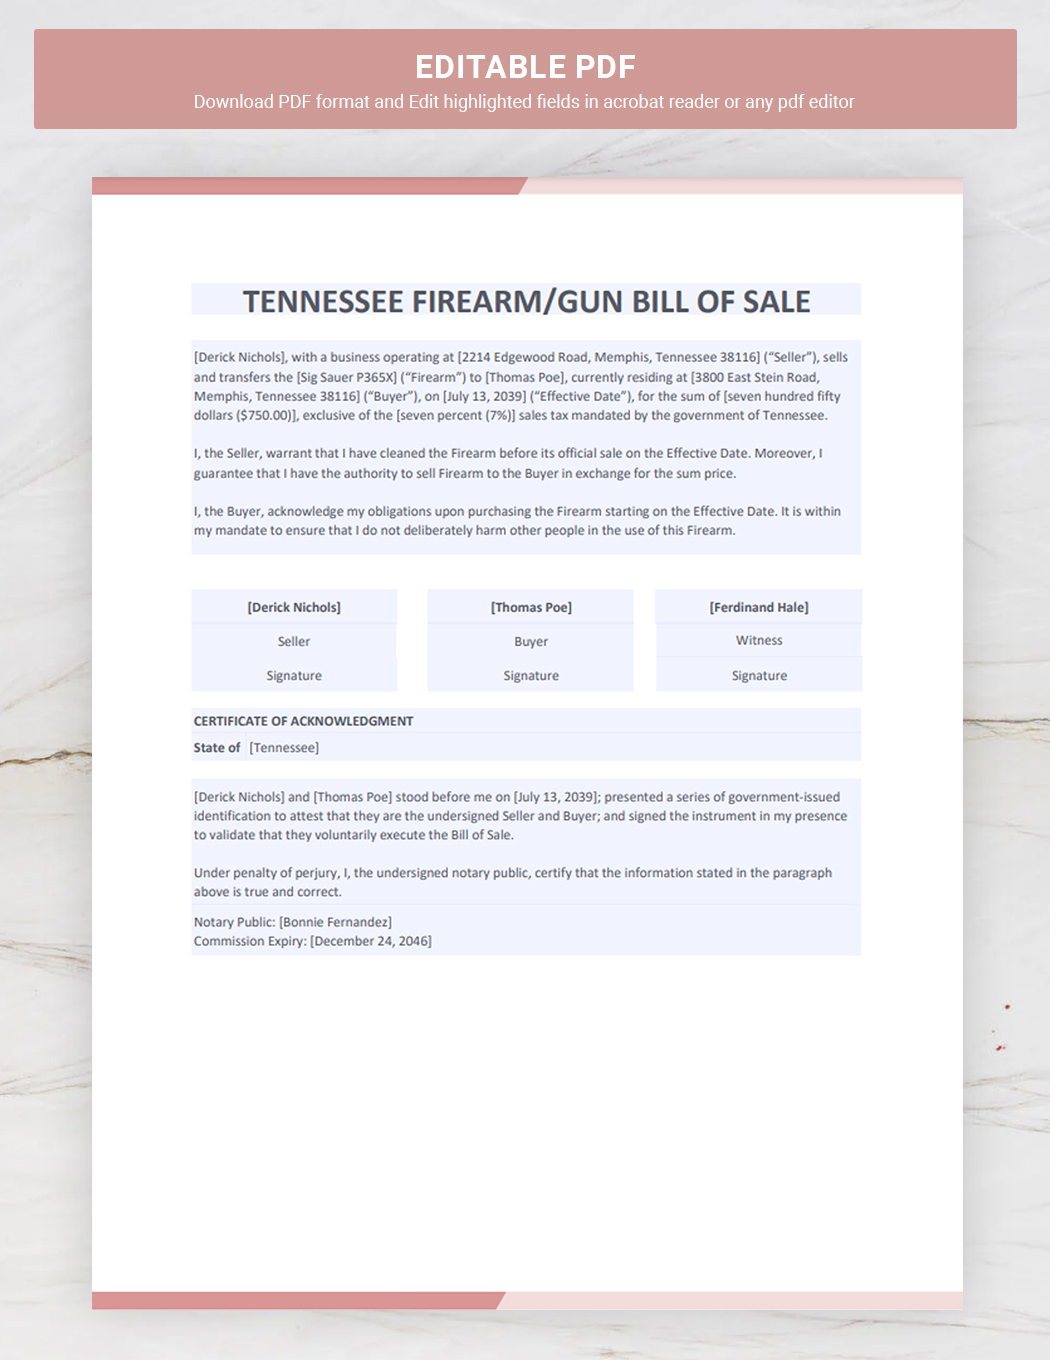 Tennessee Firearm/Gun Bill of Sale Template